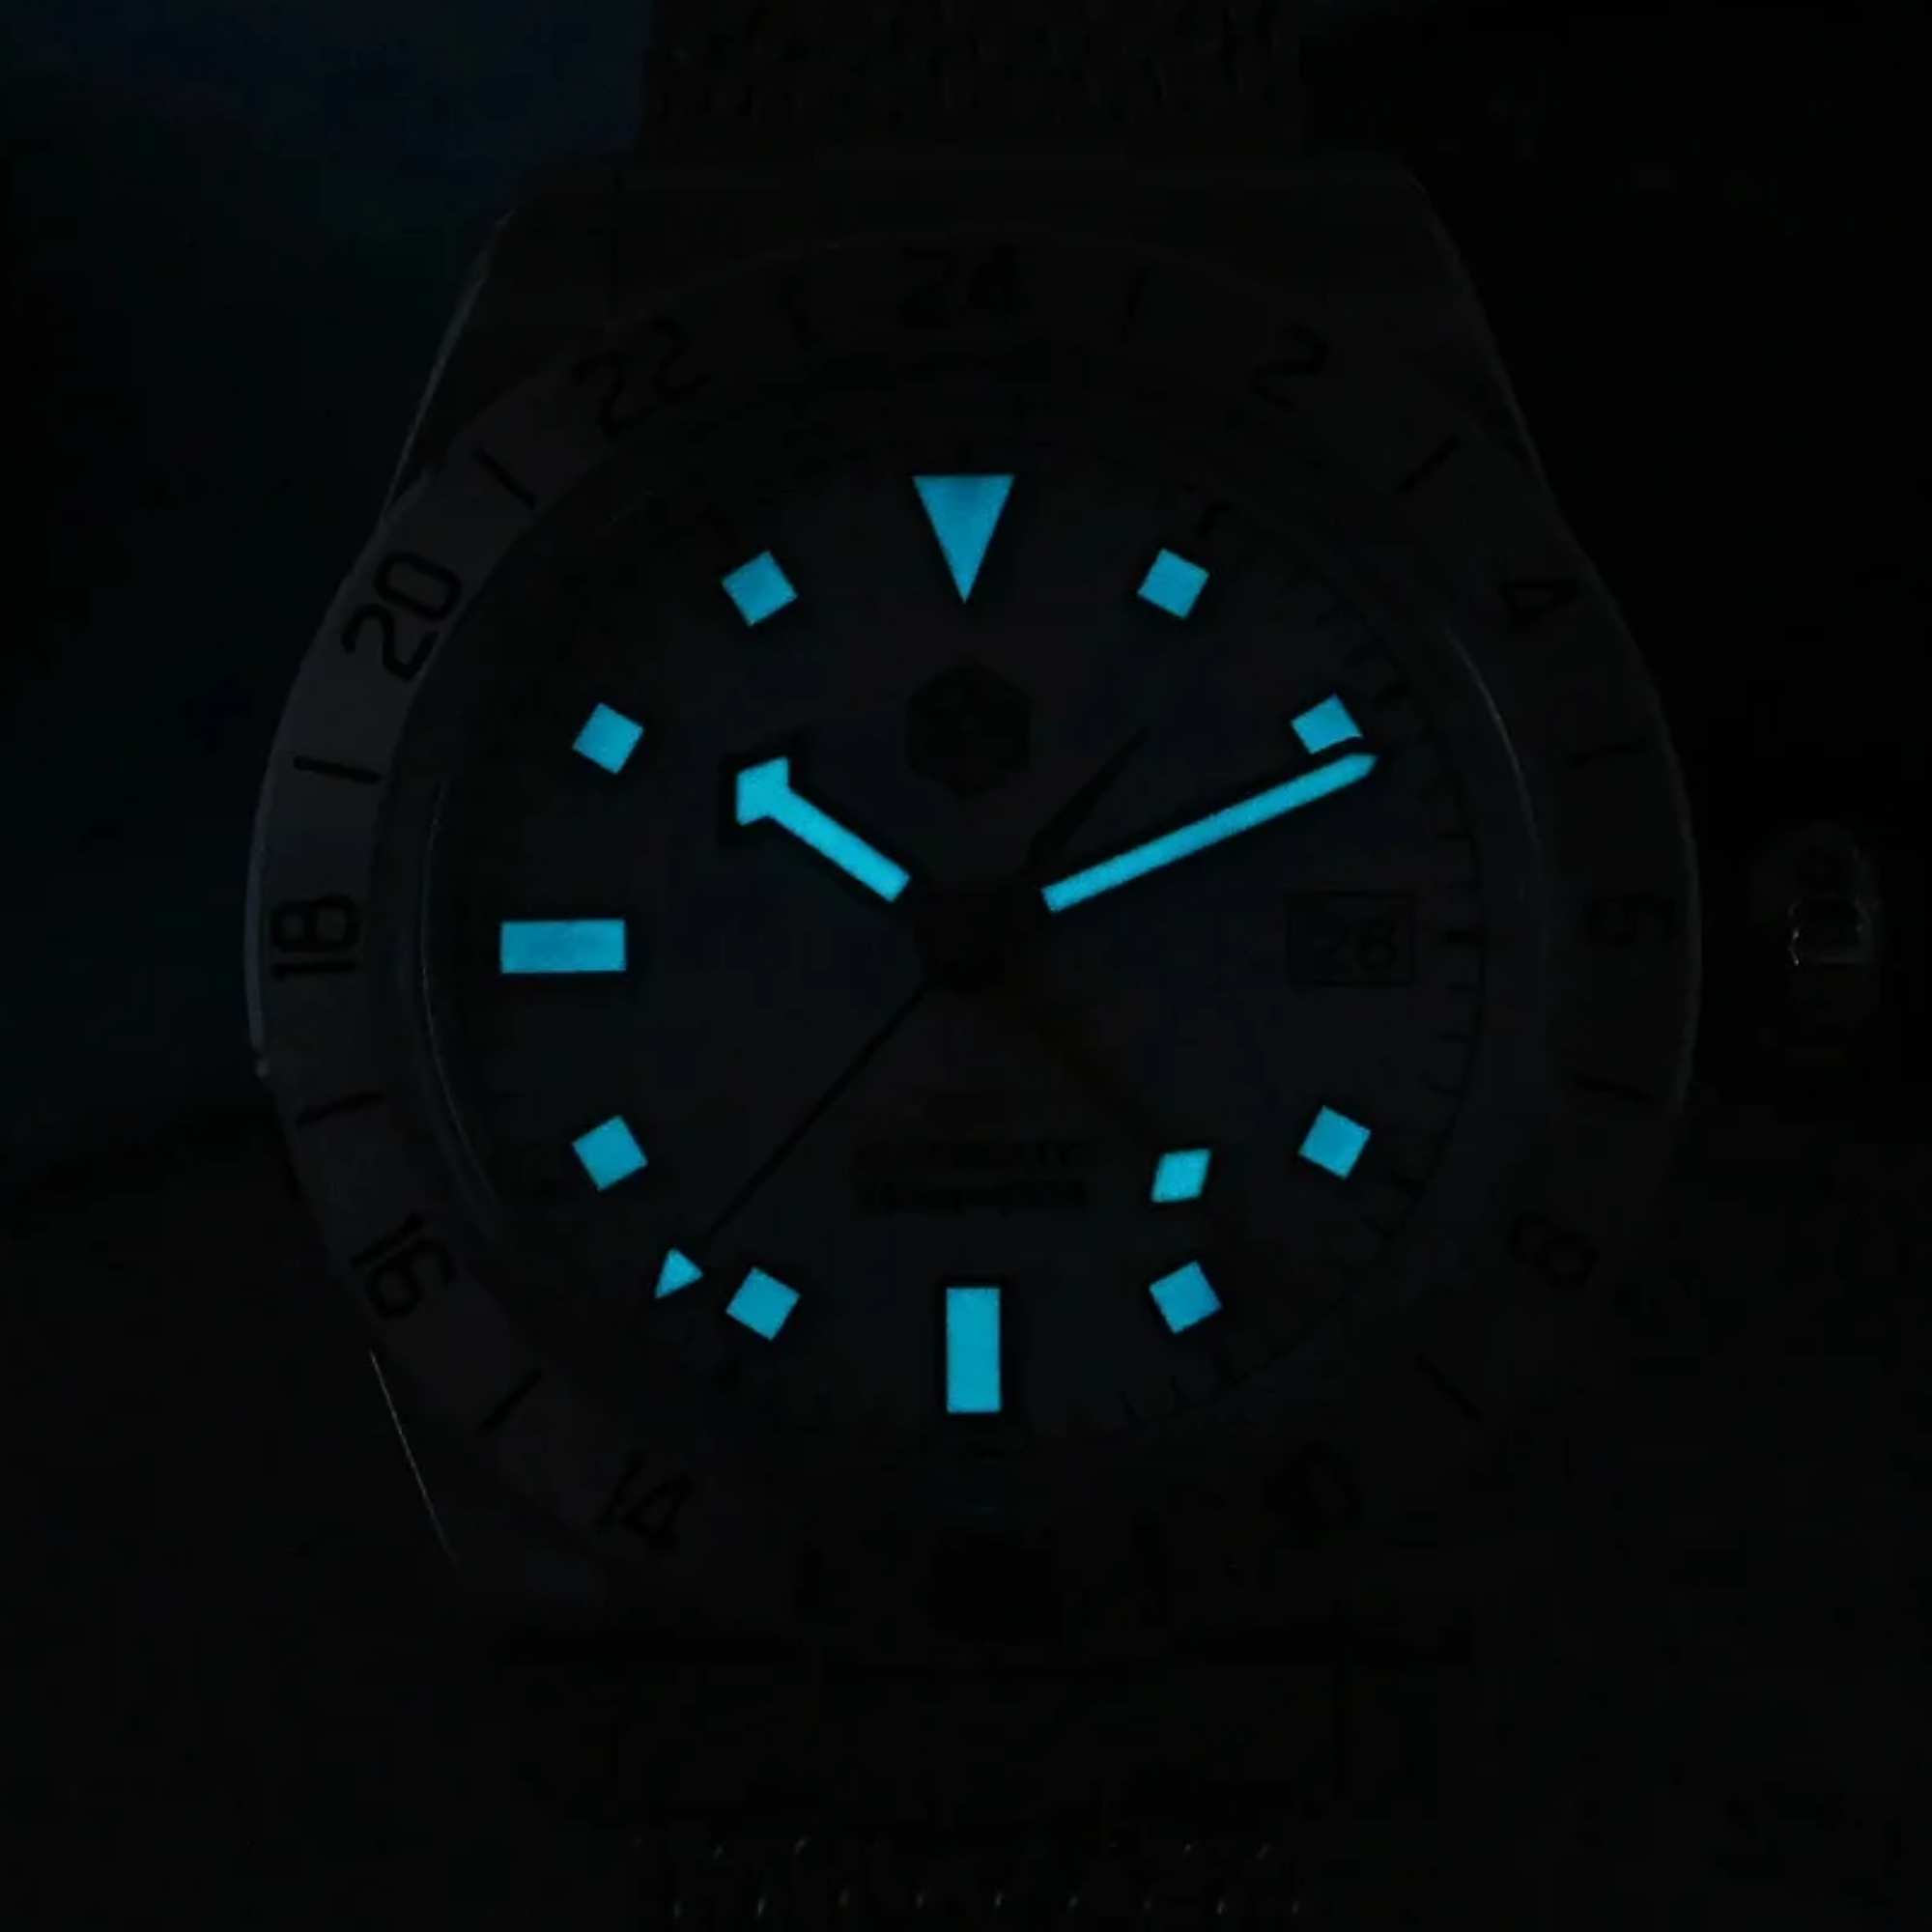 San Martin New 39mm GMT Watch Luxury NH34 SN0135 - Black